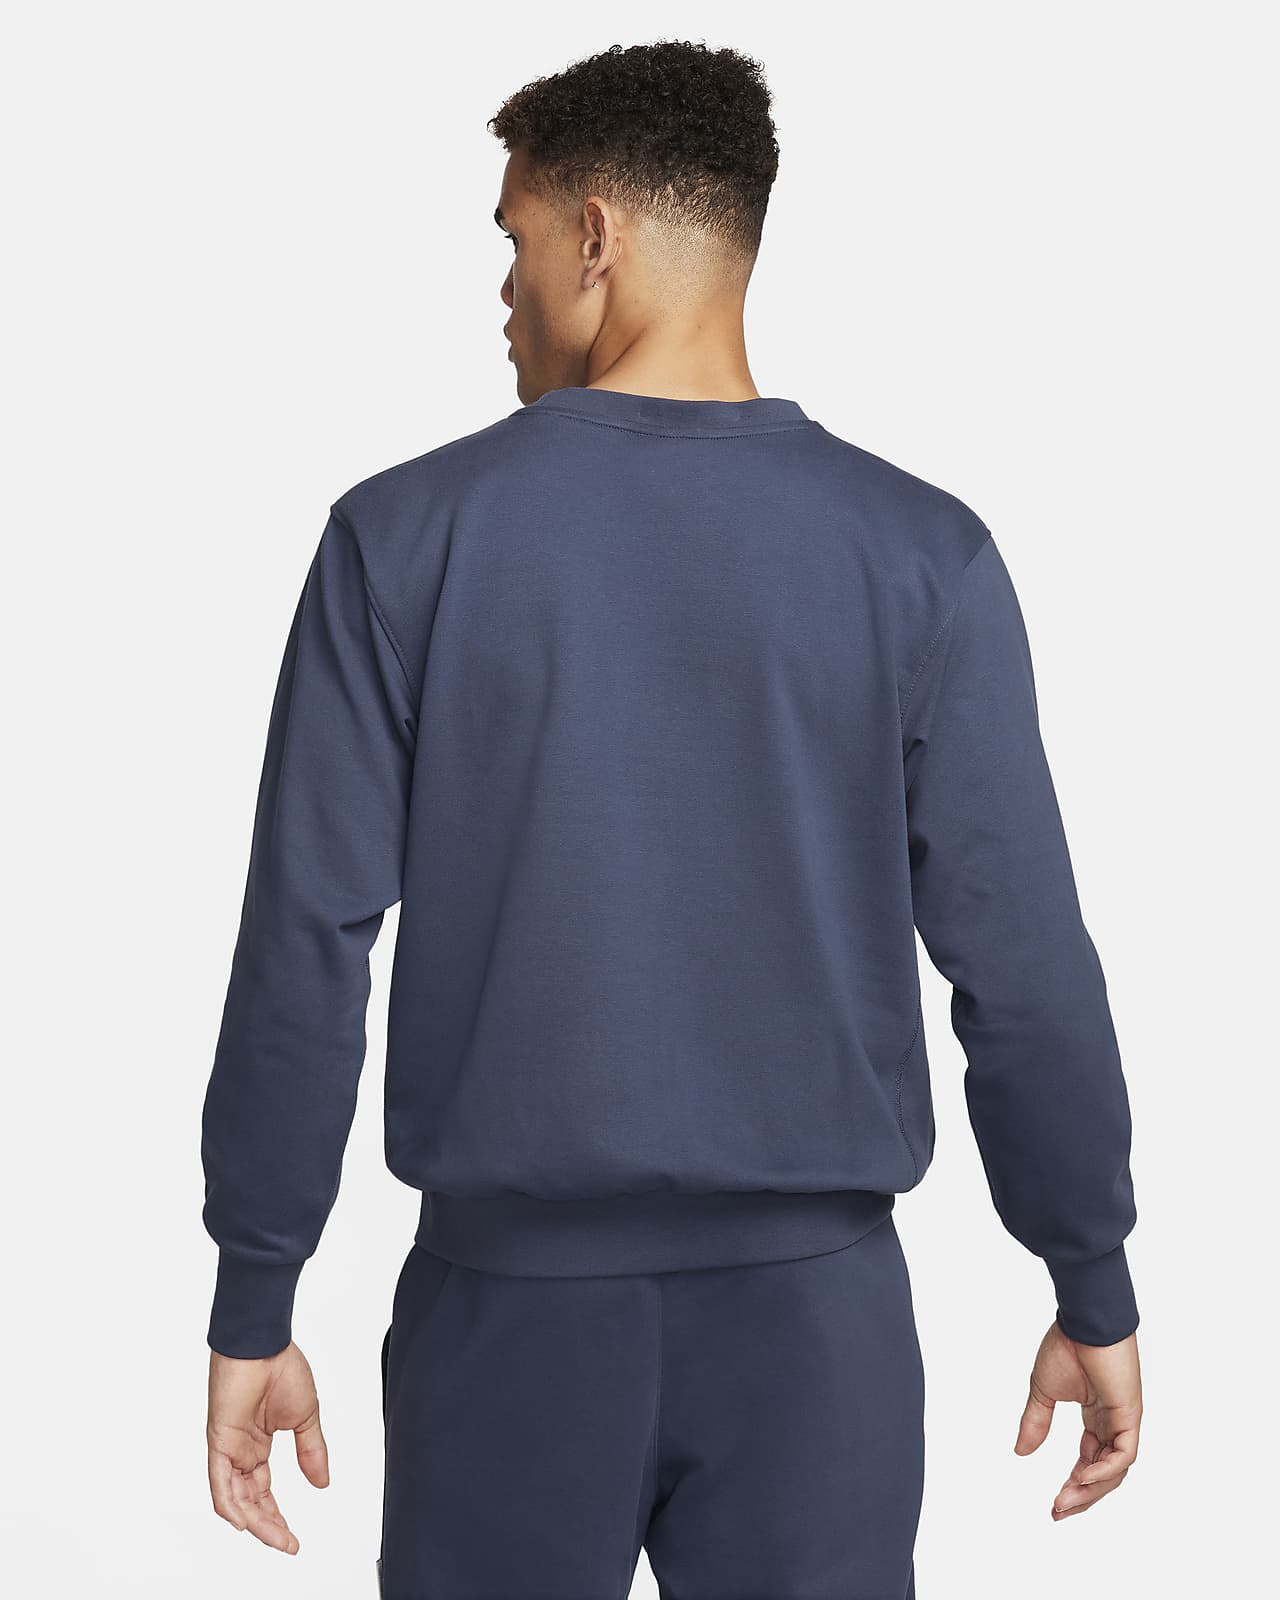 Nike Men's Dri-FIT Standard Issue Basketball Pants (Dark Grey